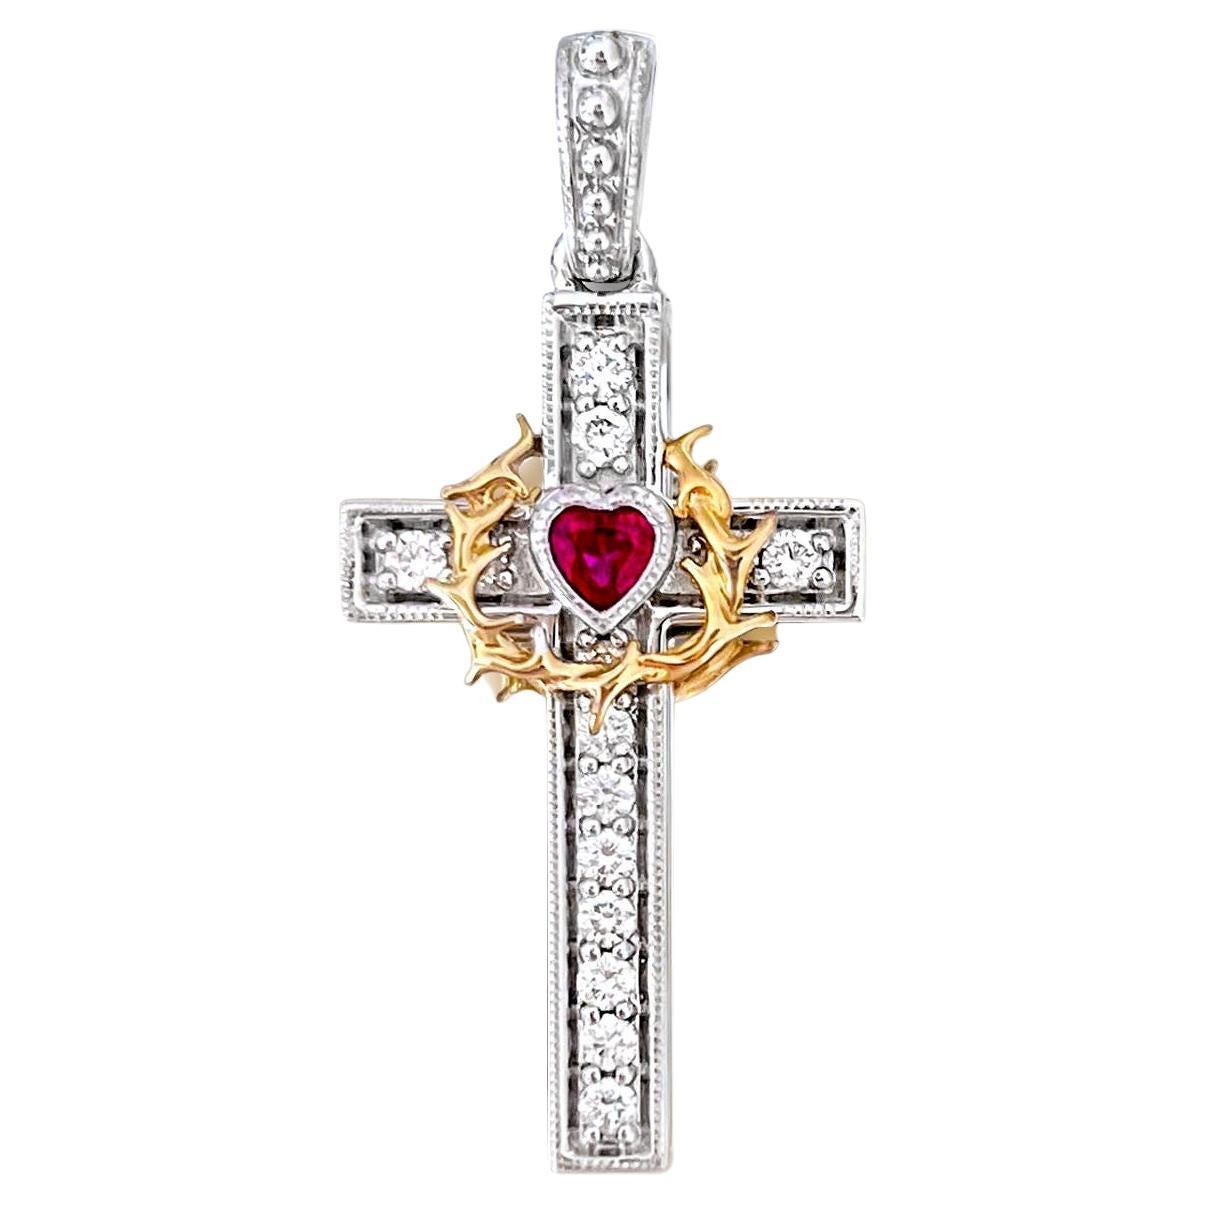 18 Karat Gold Diamond Cross Pendant with Heart Ruby